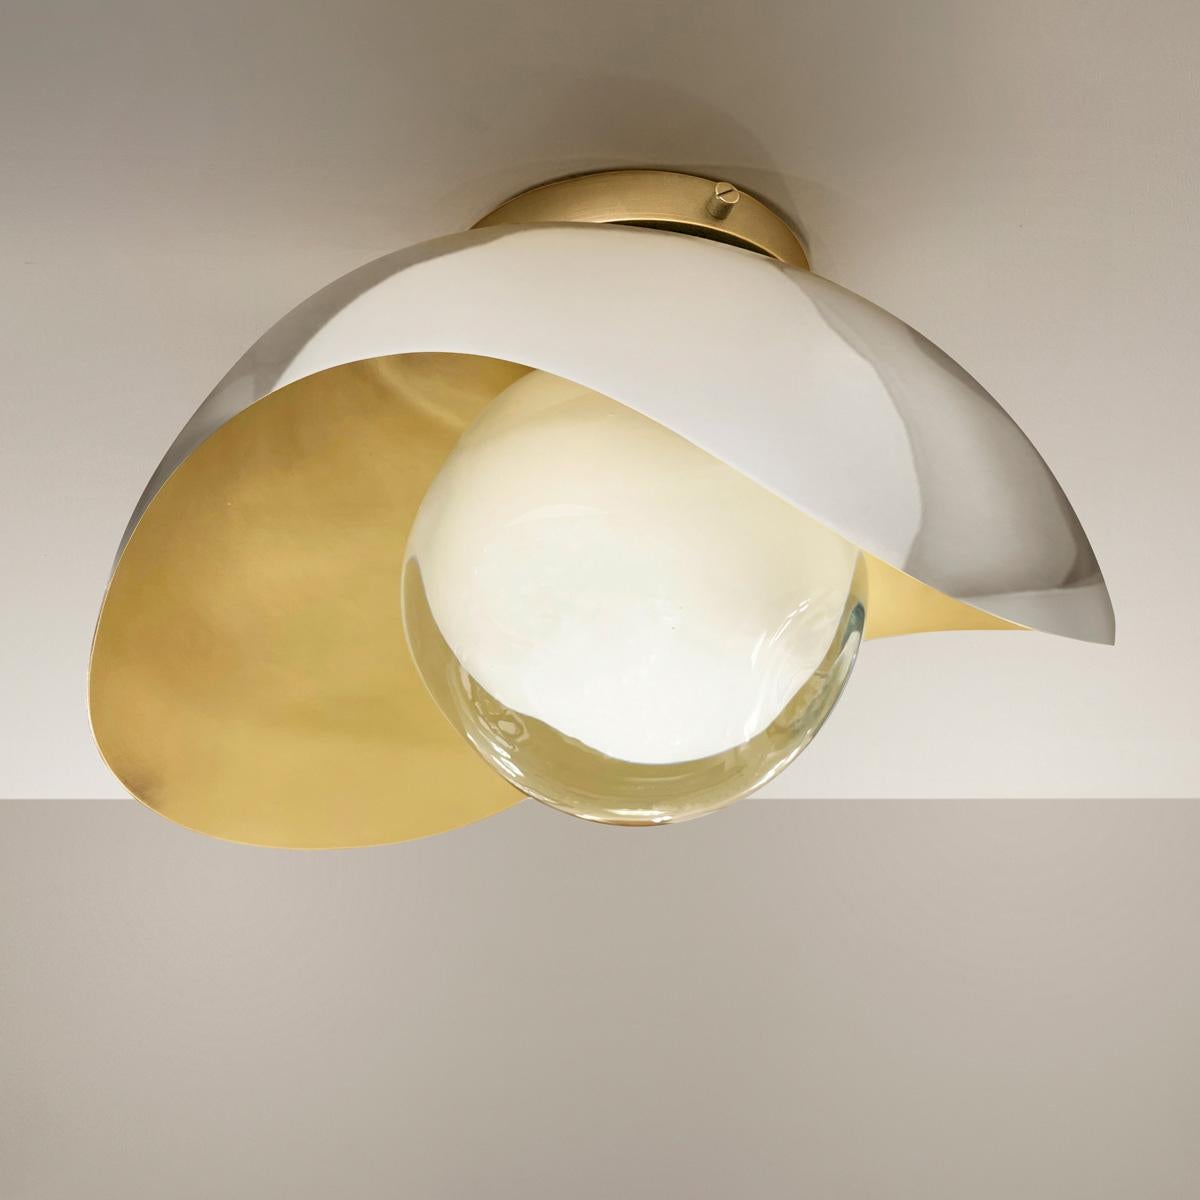 Perla Flushmount Ceiling Light by Gaspare Asaro-Satin Brass/Bronze Finish. For Sale 1